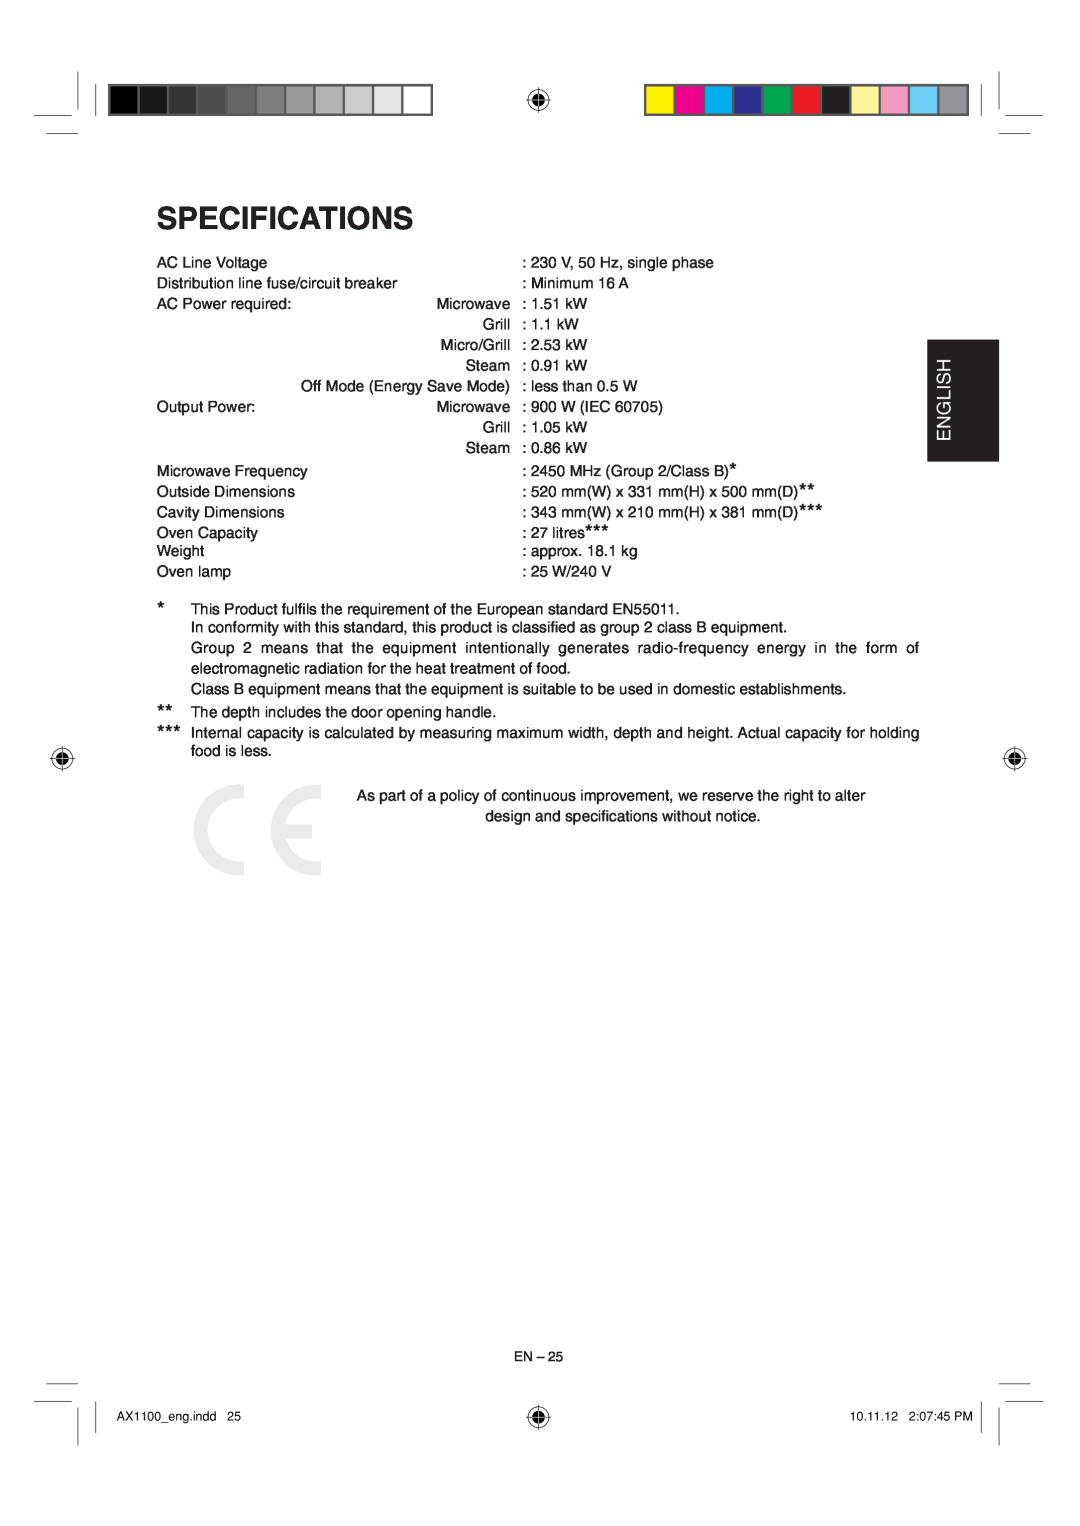 Sharp AX-1100 operation manual Specifications, English 